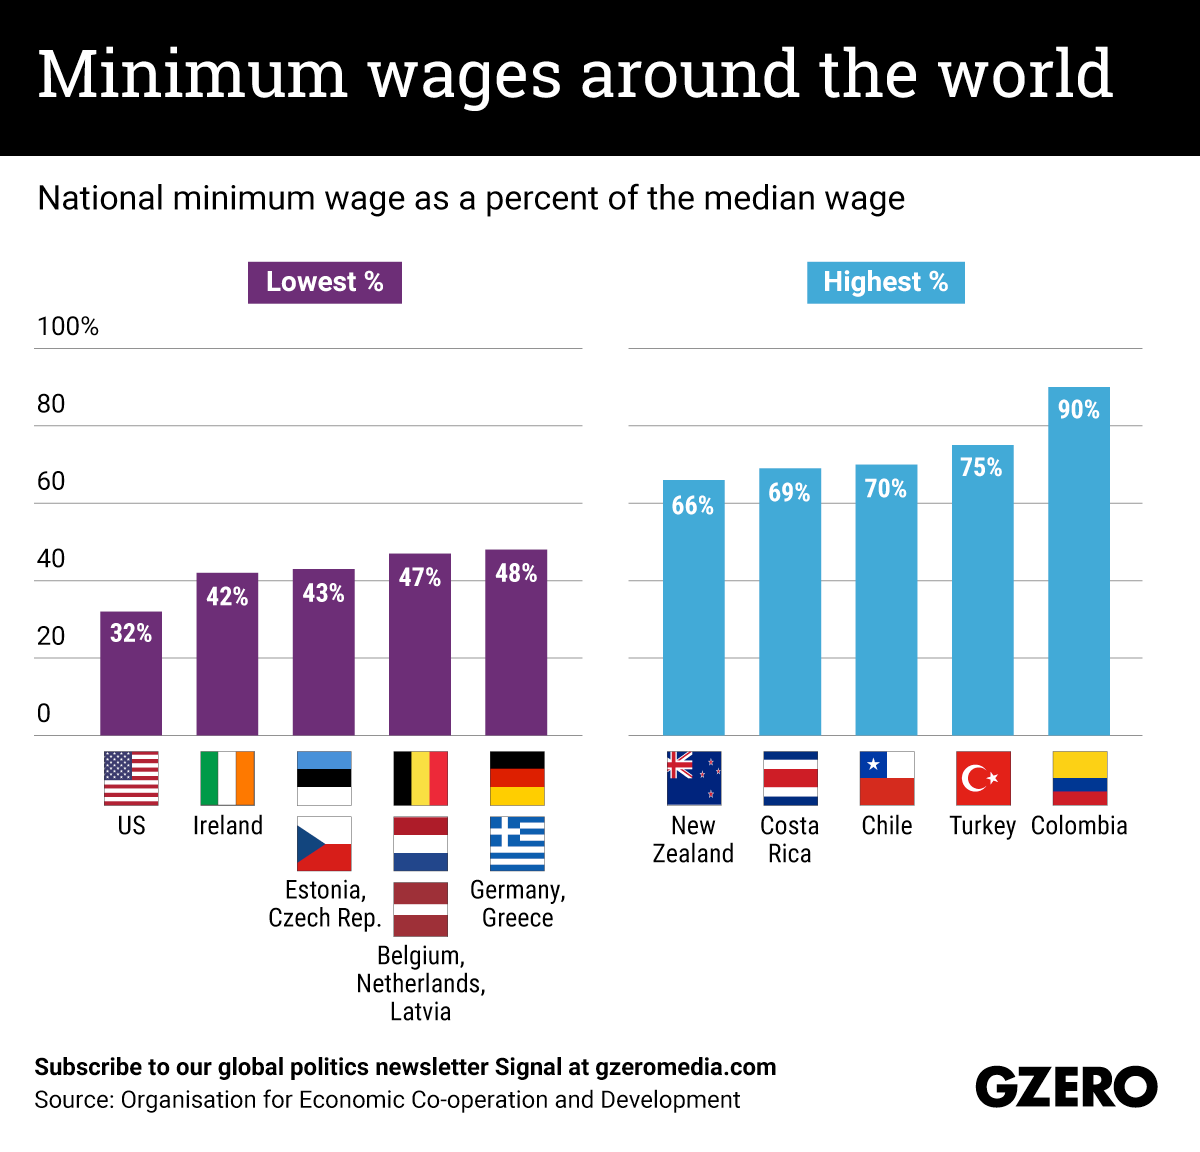 The Graphic Truth: Minimum wages around the world